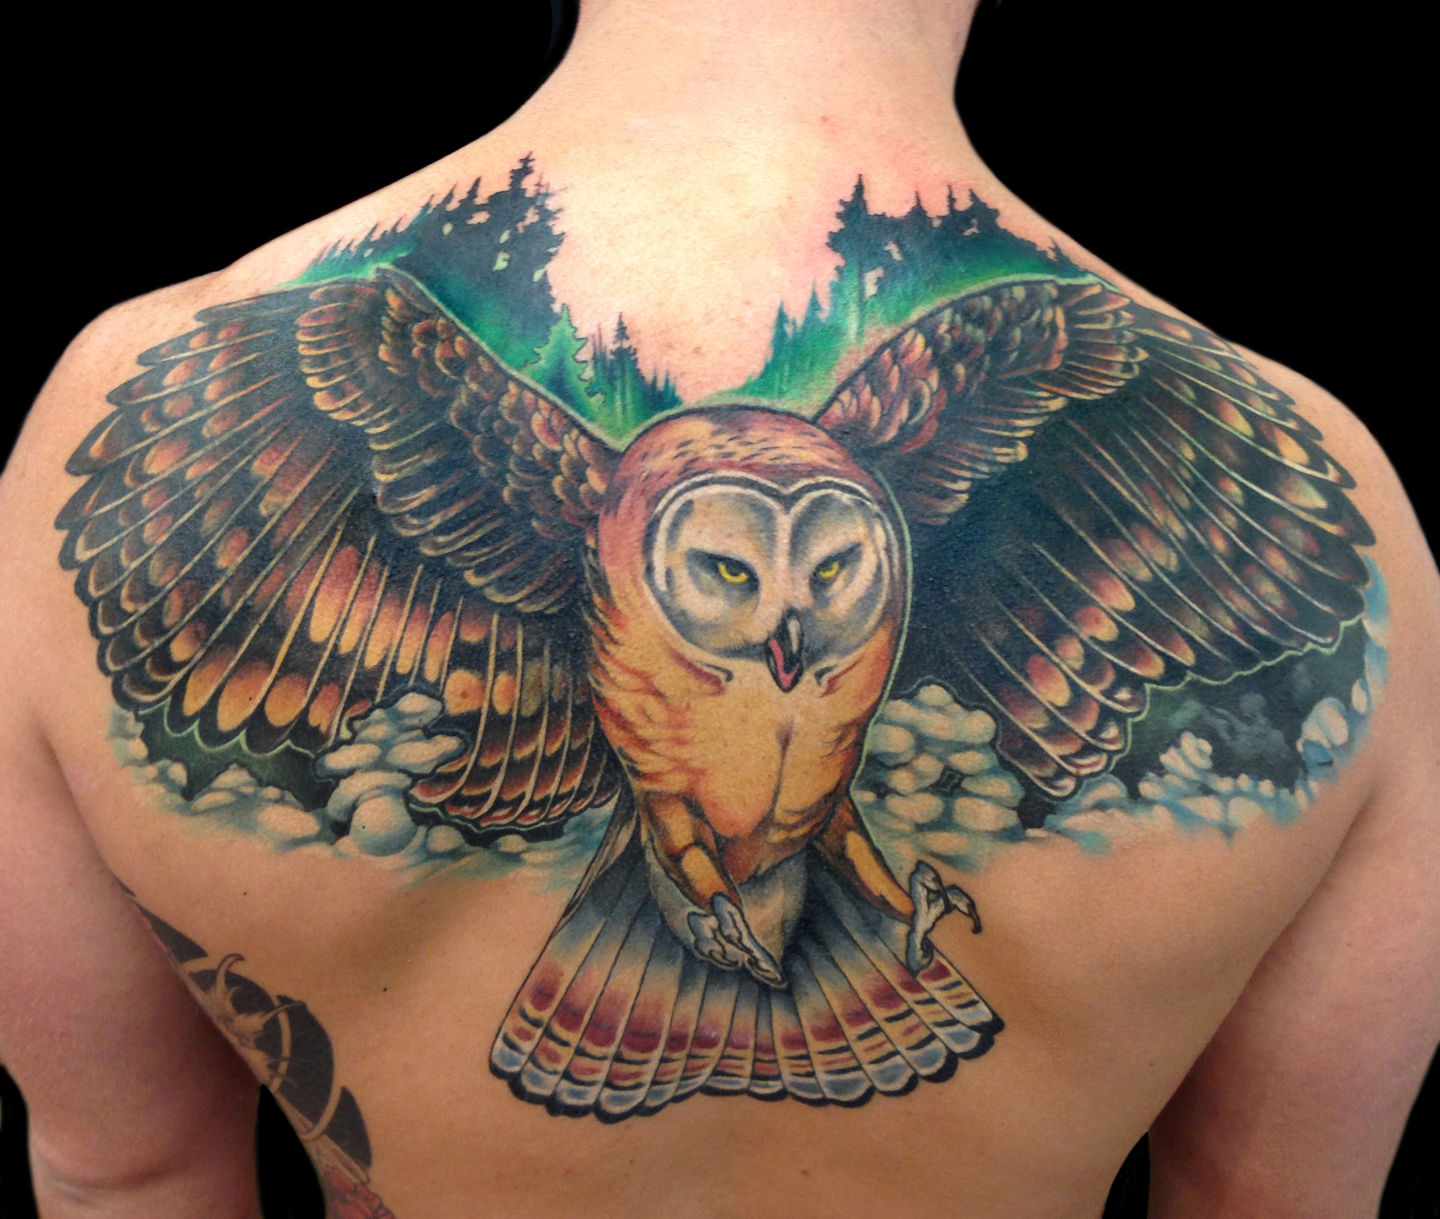 Owl by Sebastiaan  Bunker Tattoo  Quality tattoos